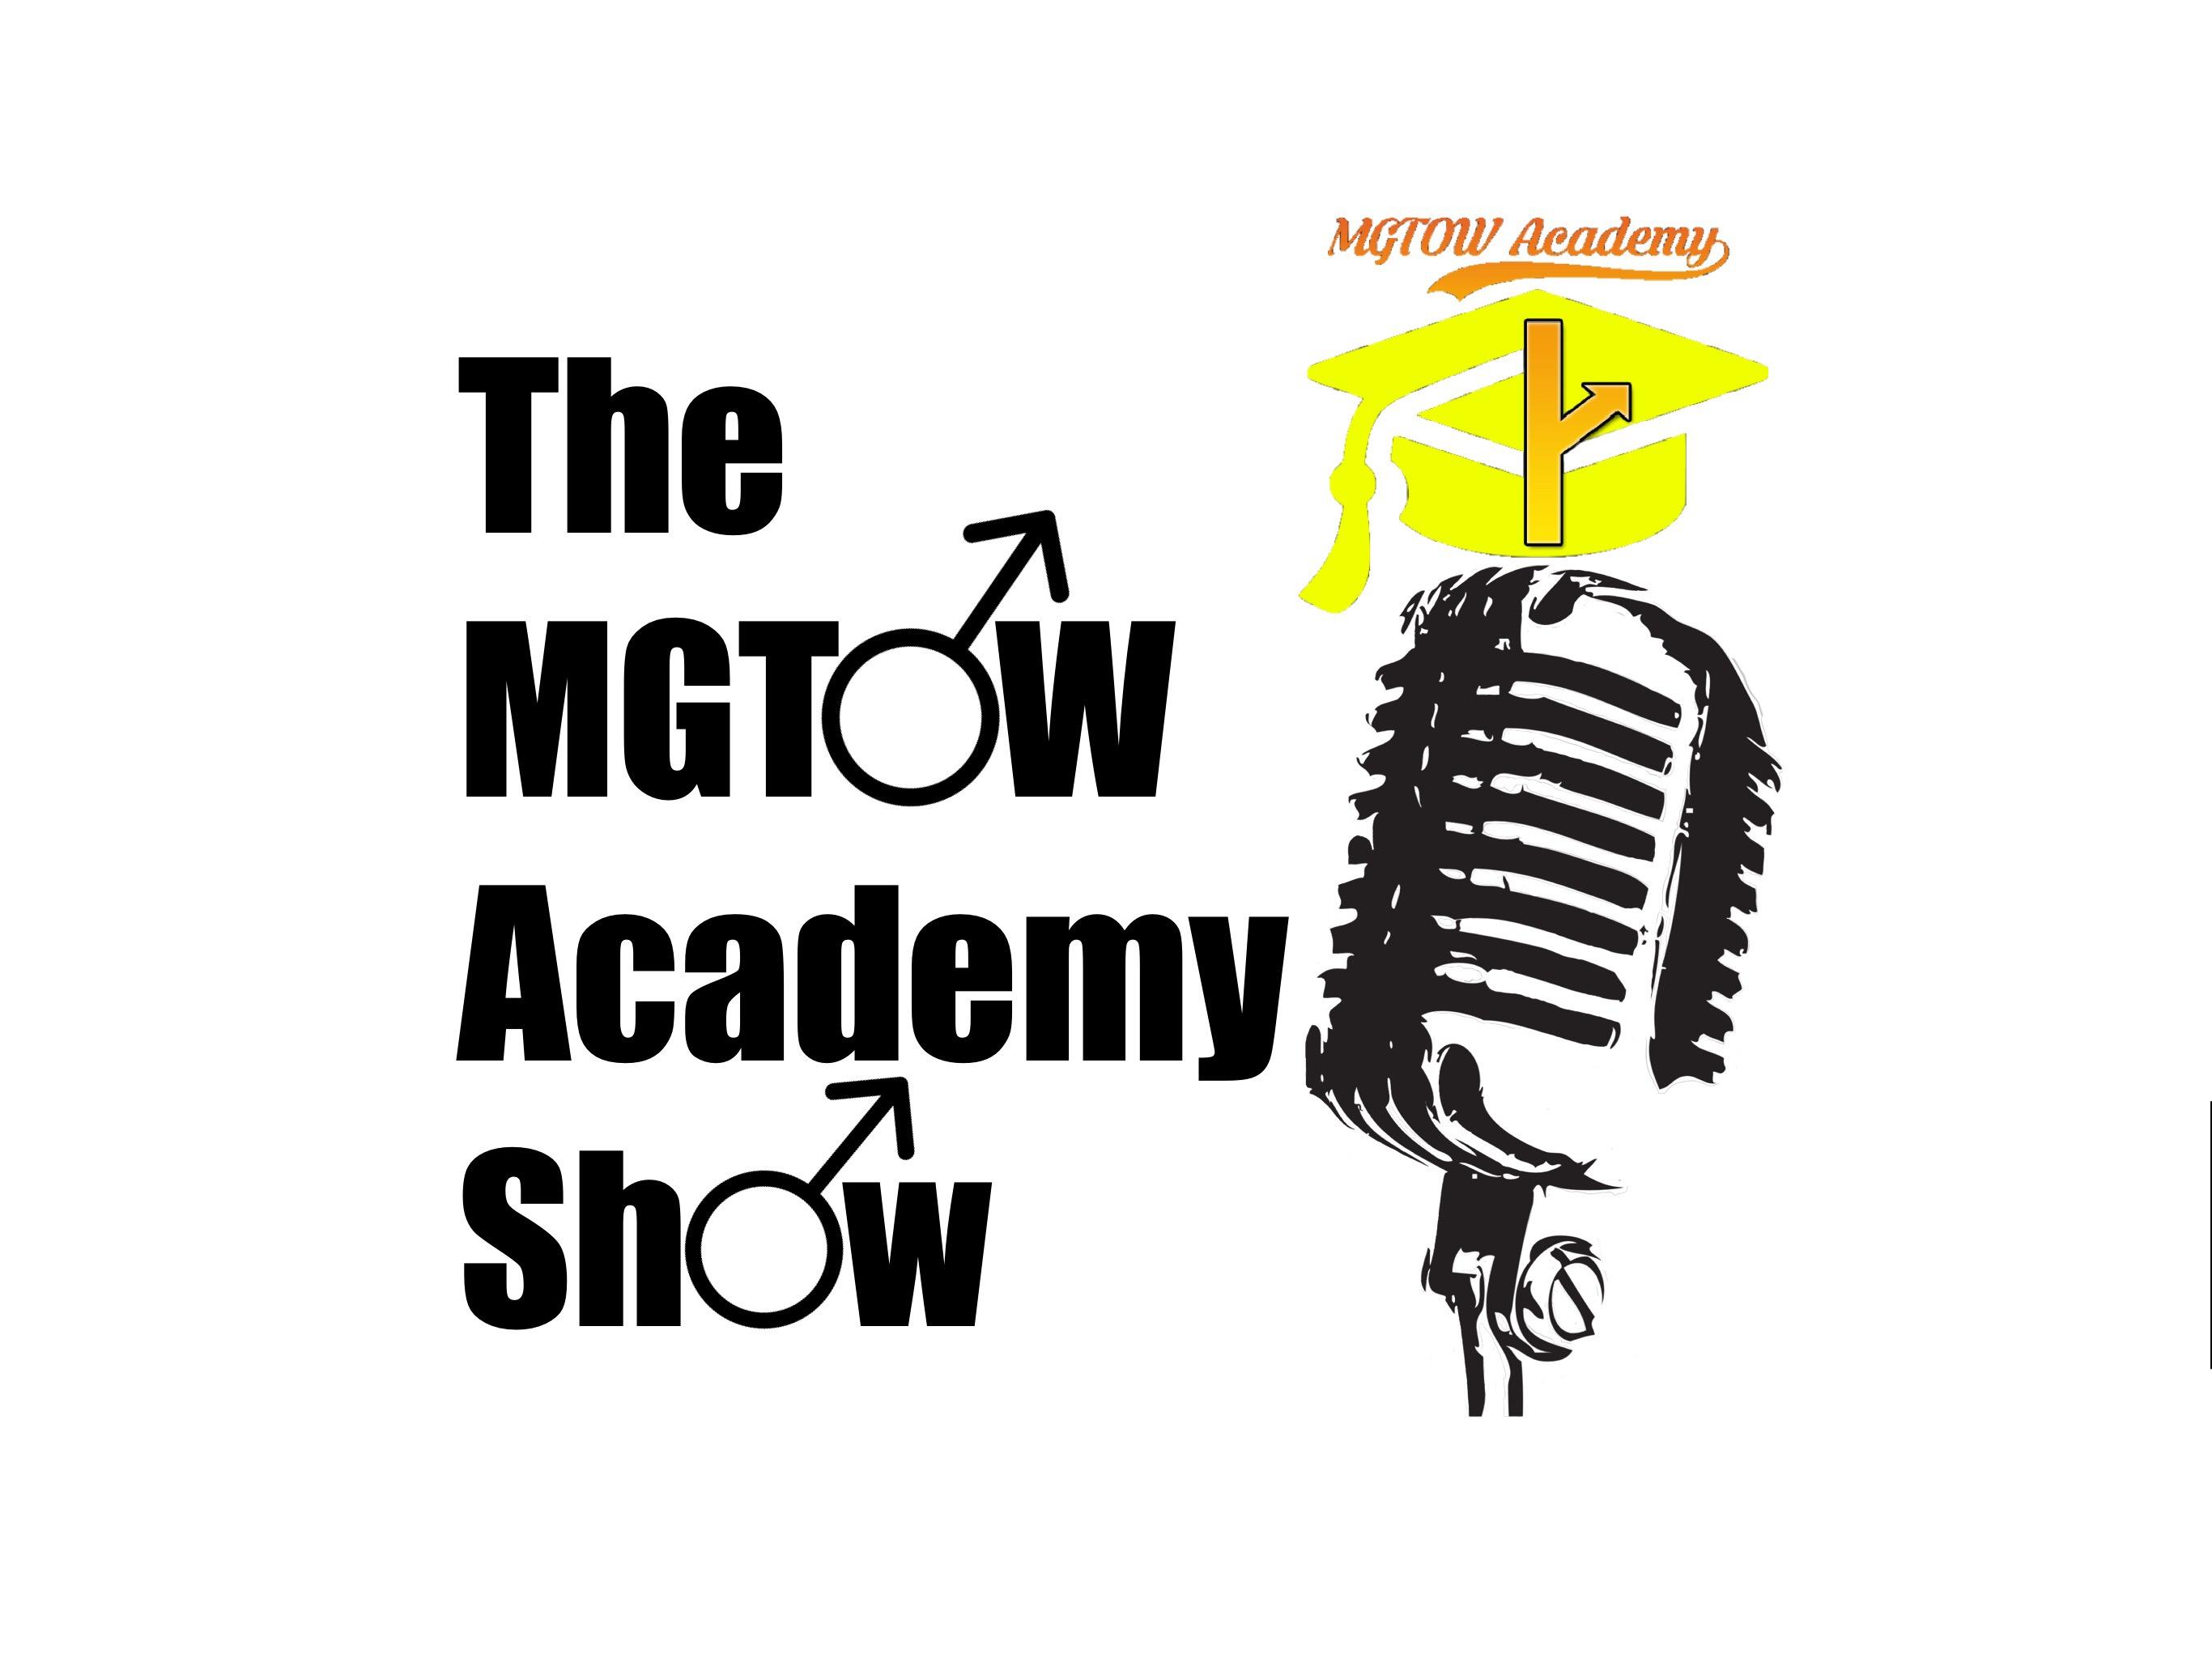 The MGTOW Academy Show